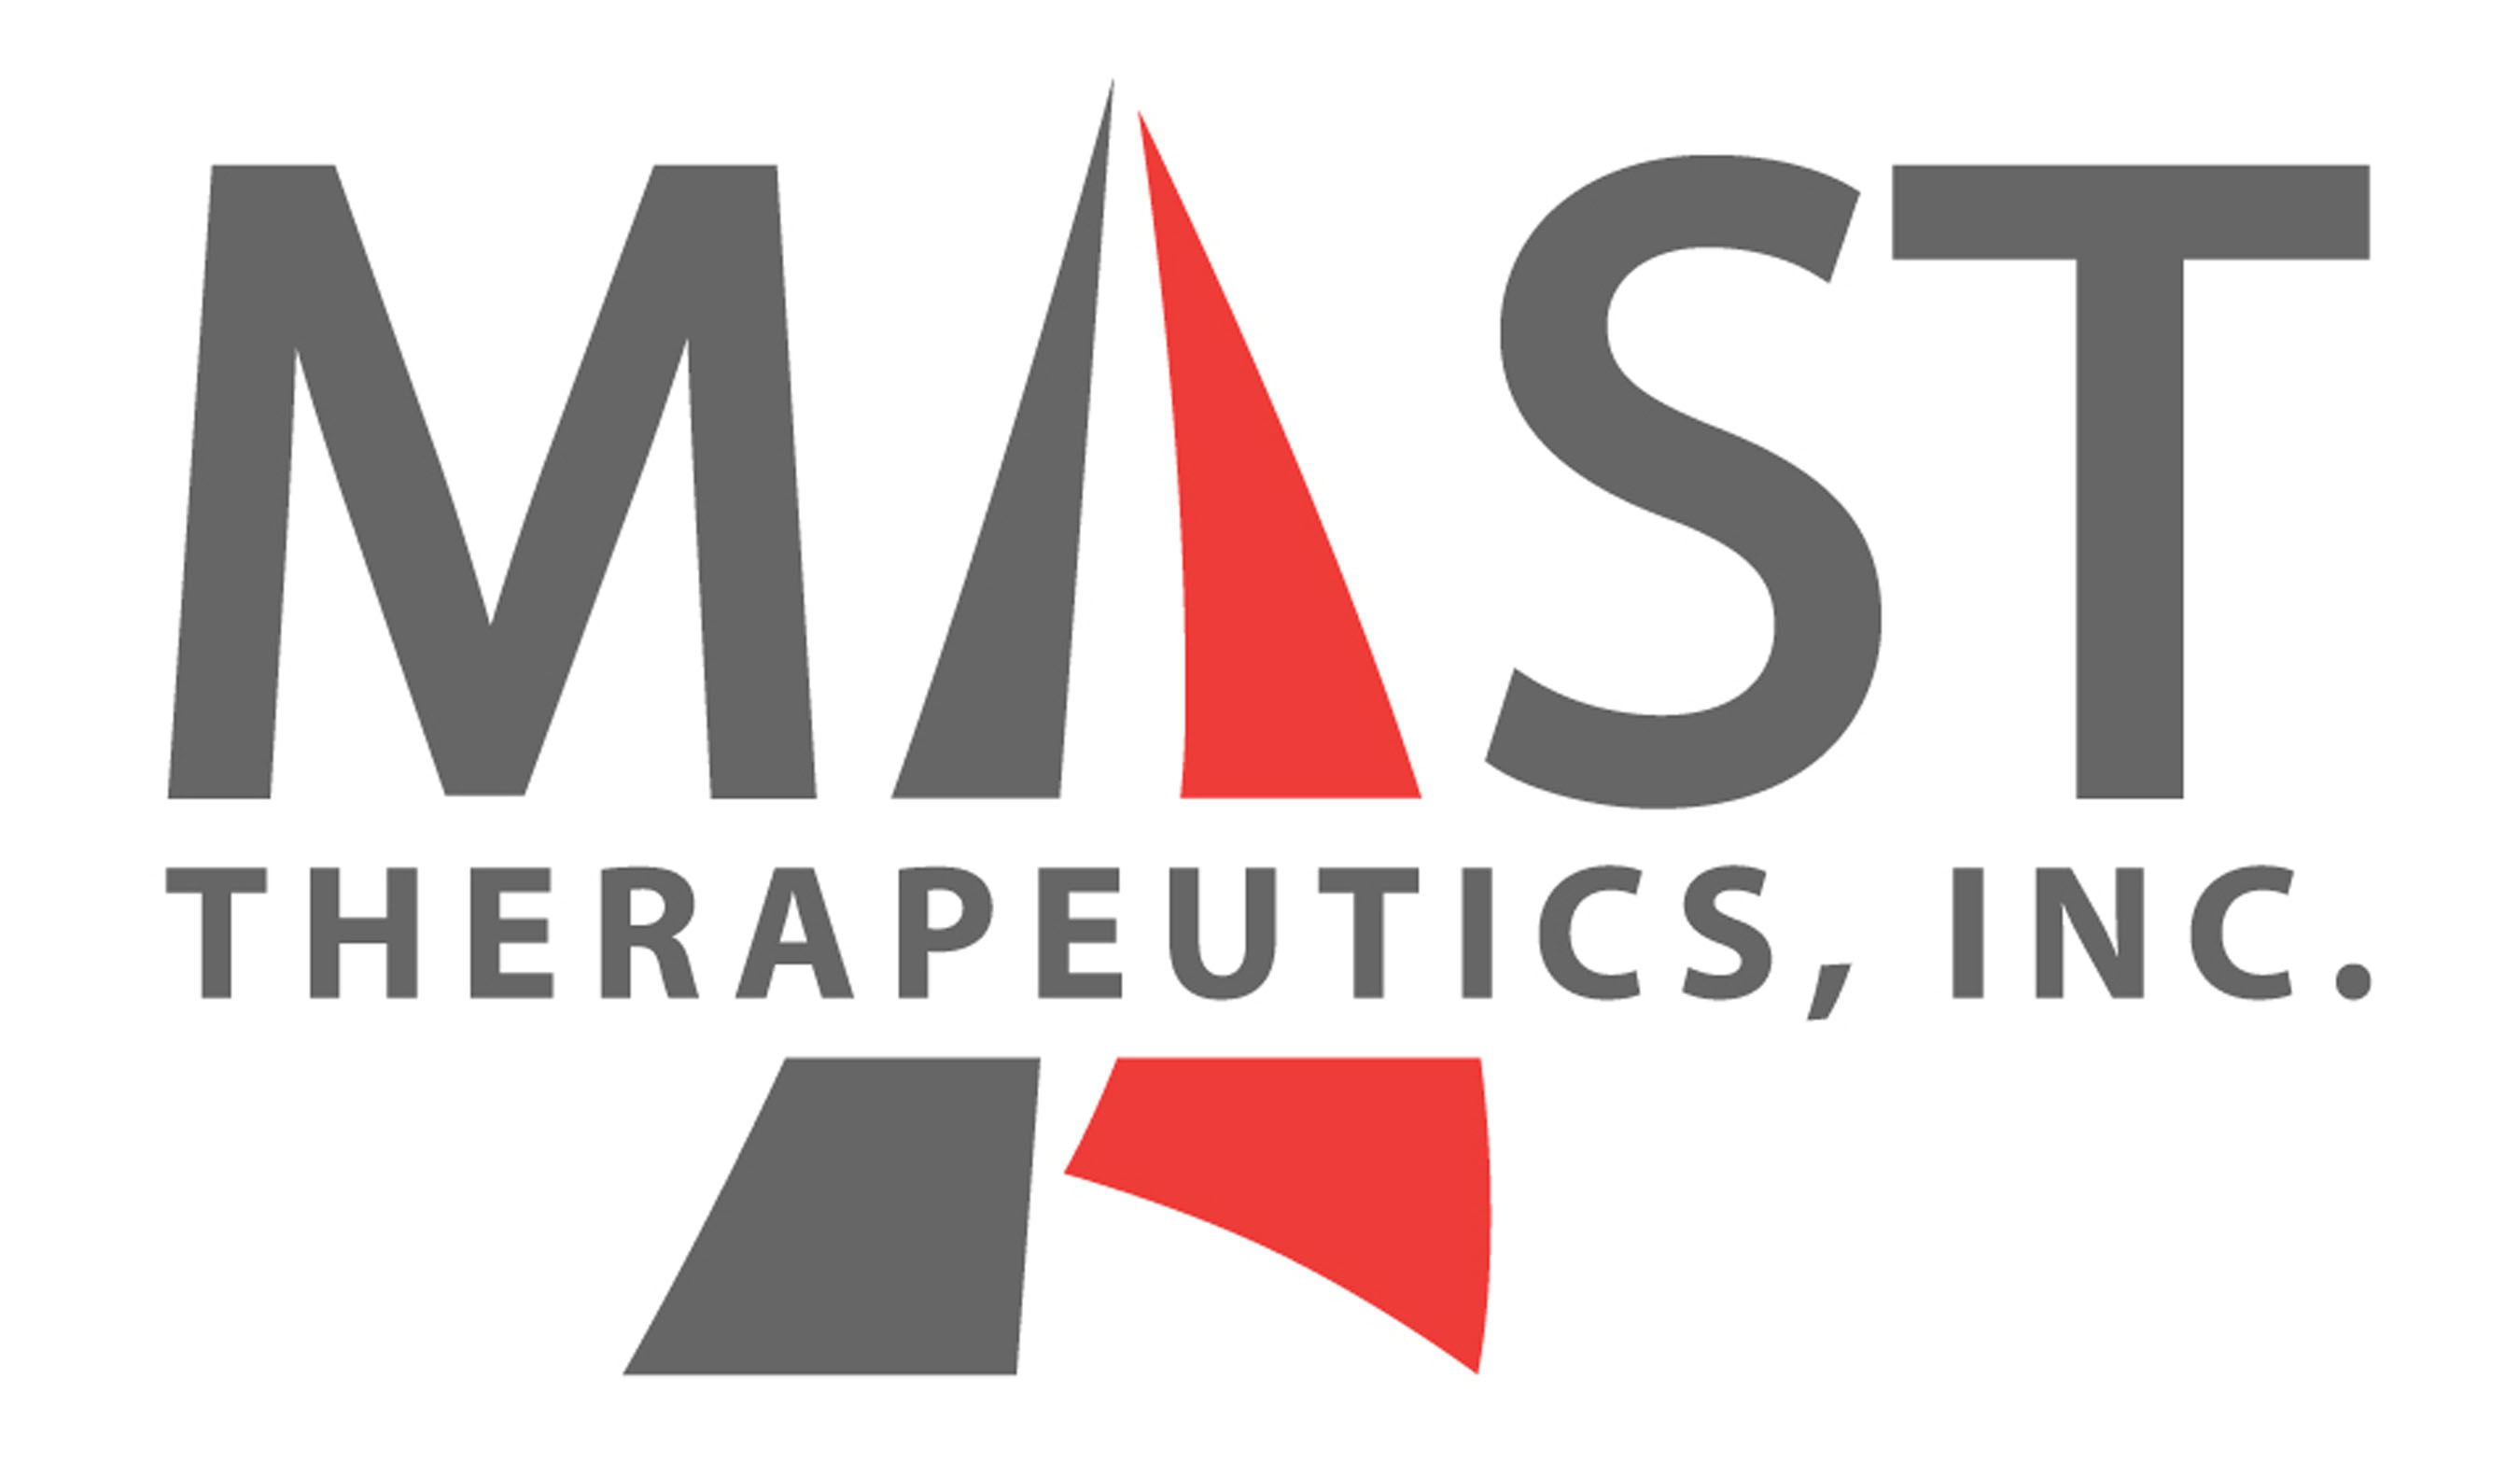 Mast Therapeutics, Inc. logo.